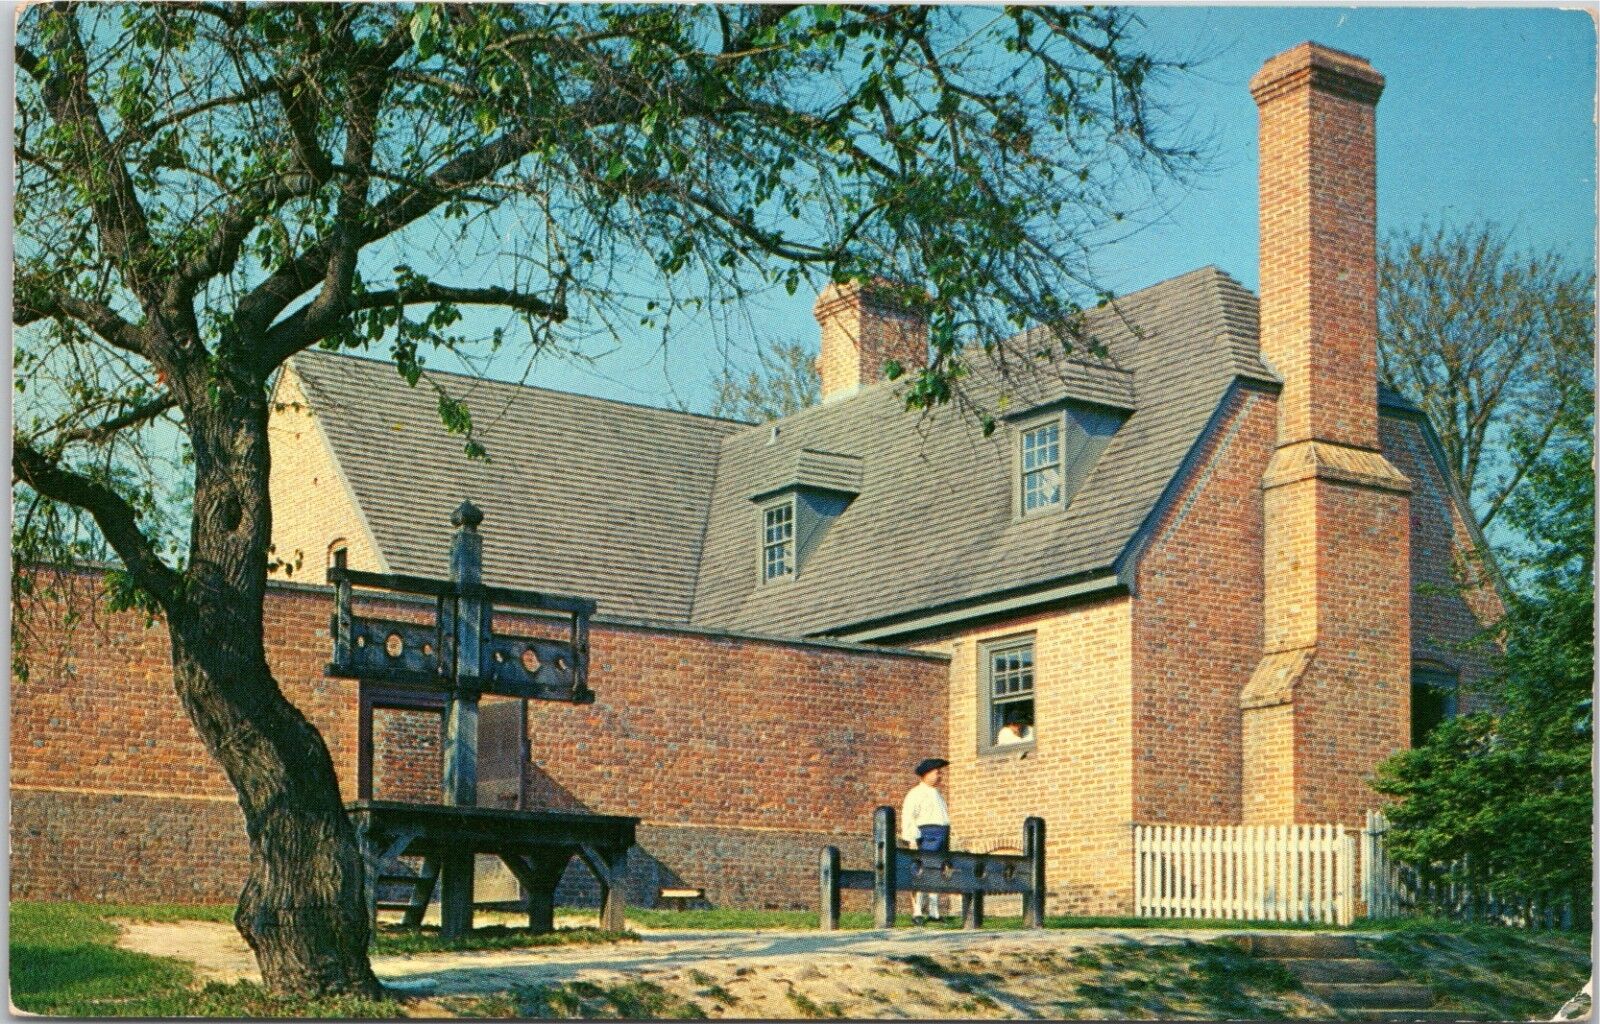 Colonial Williamsburg Virginia - The Public Gaol (jail)